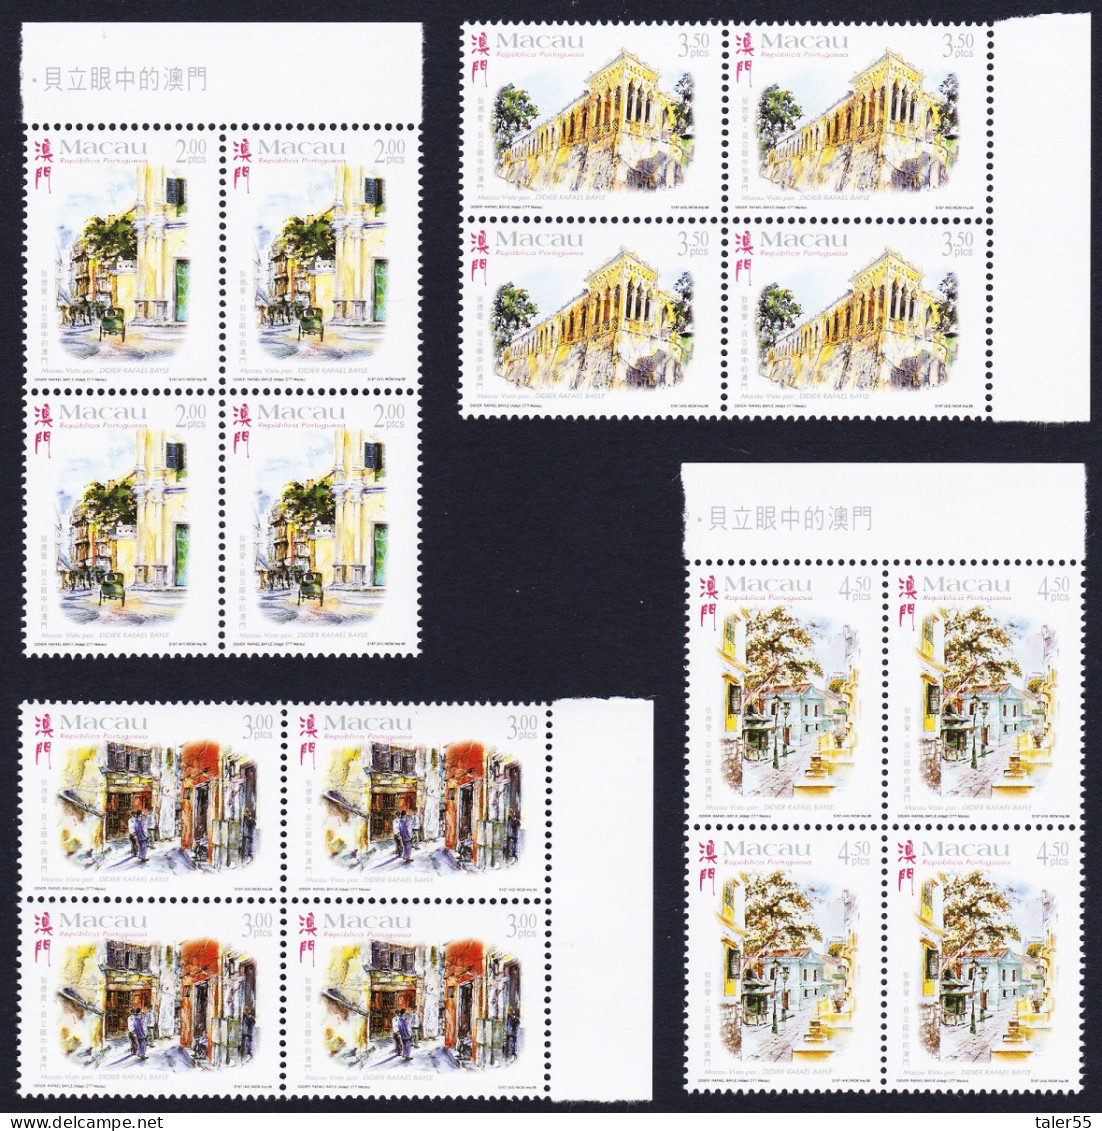 Macao Macau Paintings By Didier Rafael Bayle 4v Blocks Of 4 1998 MNH SG#1071-1074 MI#992-995 Sc#957-960 - Unused Stamps